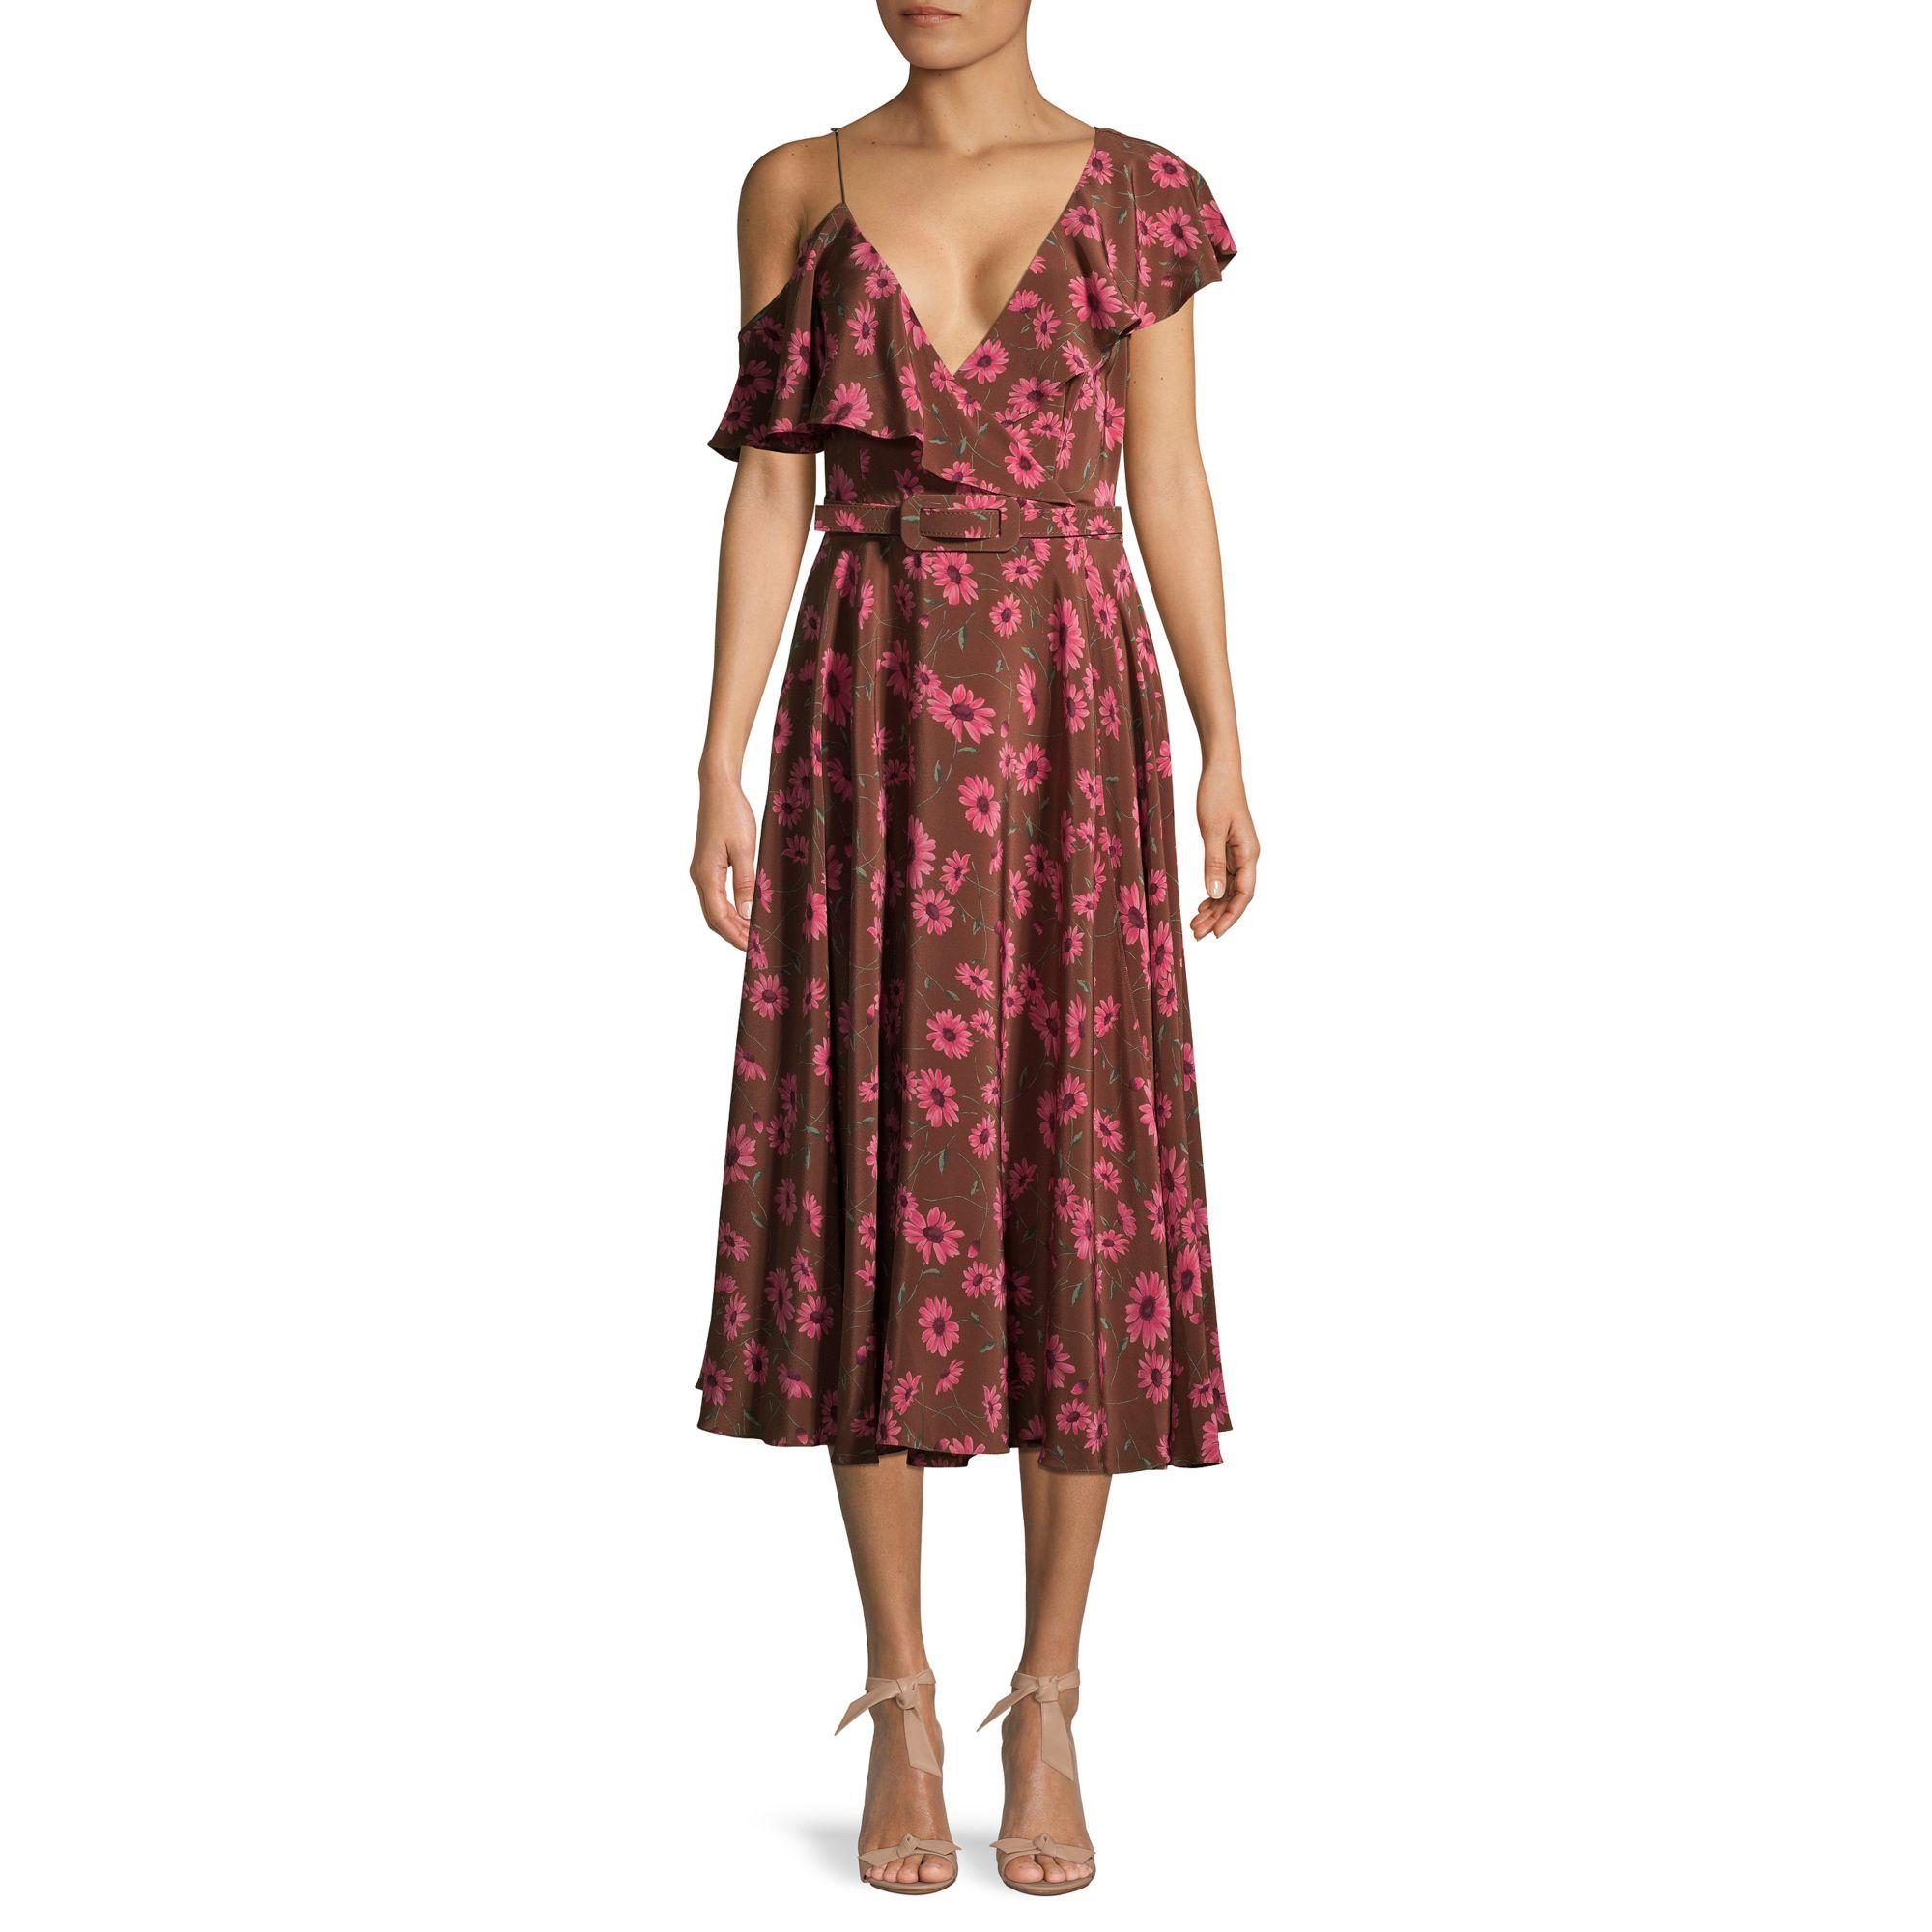 Michael Kors Floral Asymmetric Ruffle Silk Dress in Red - Lyst